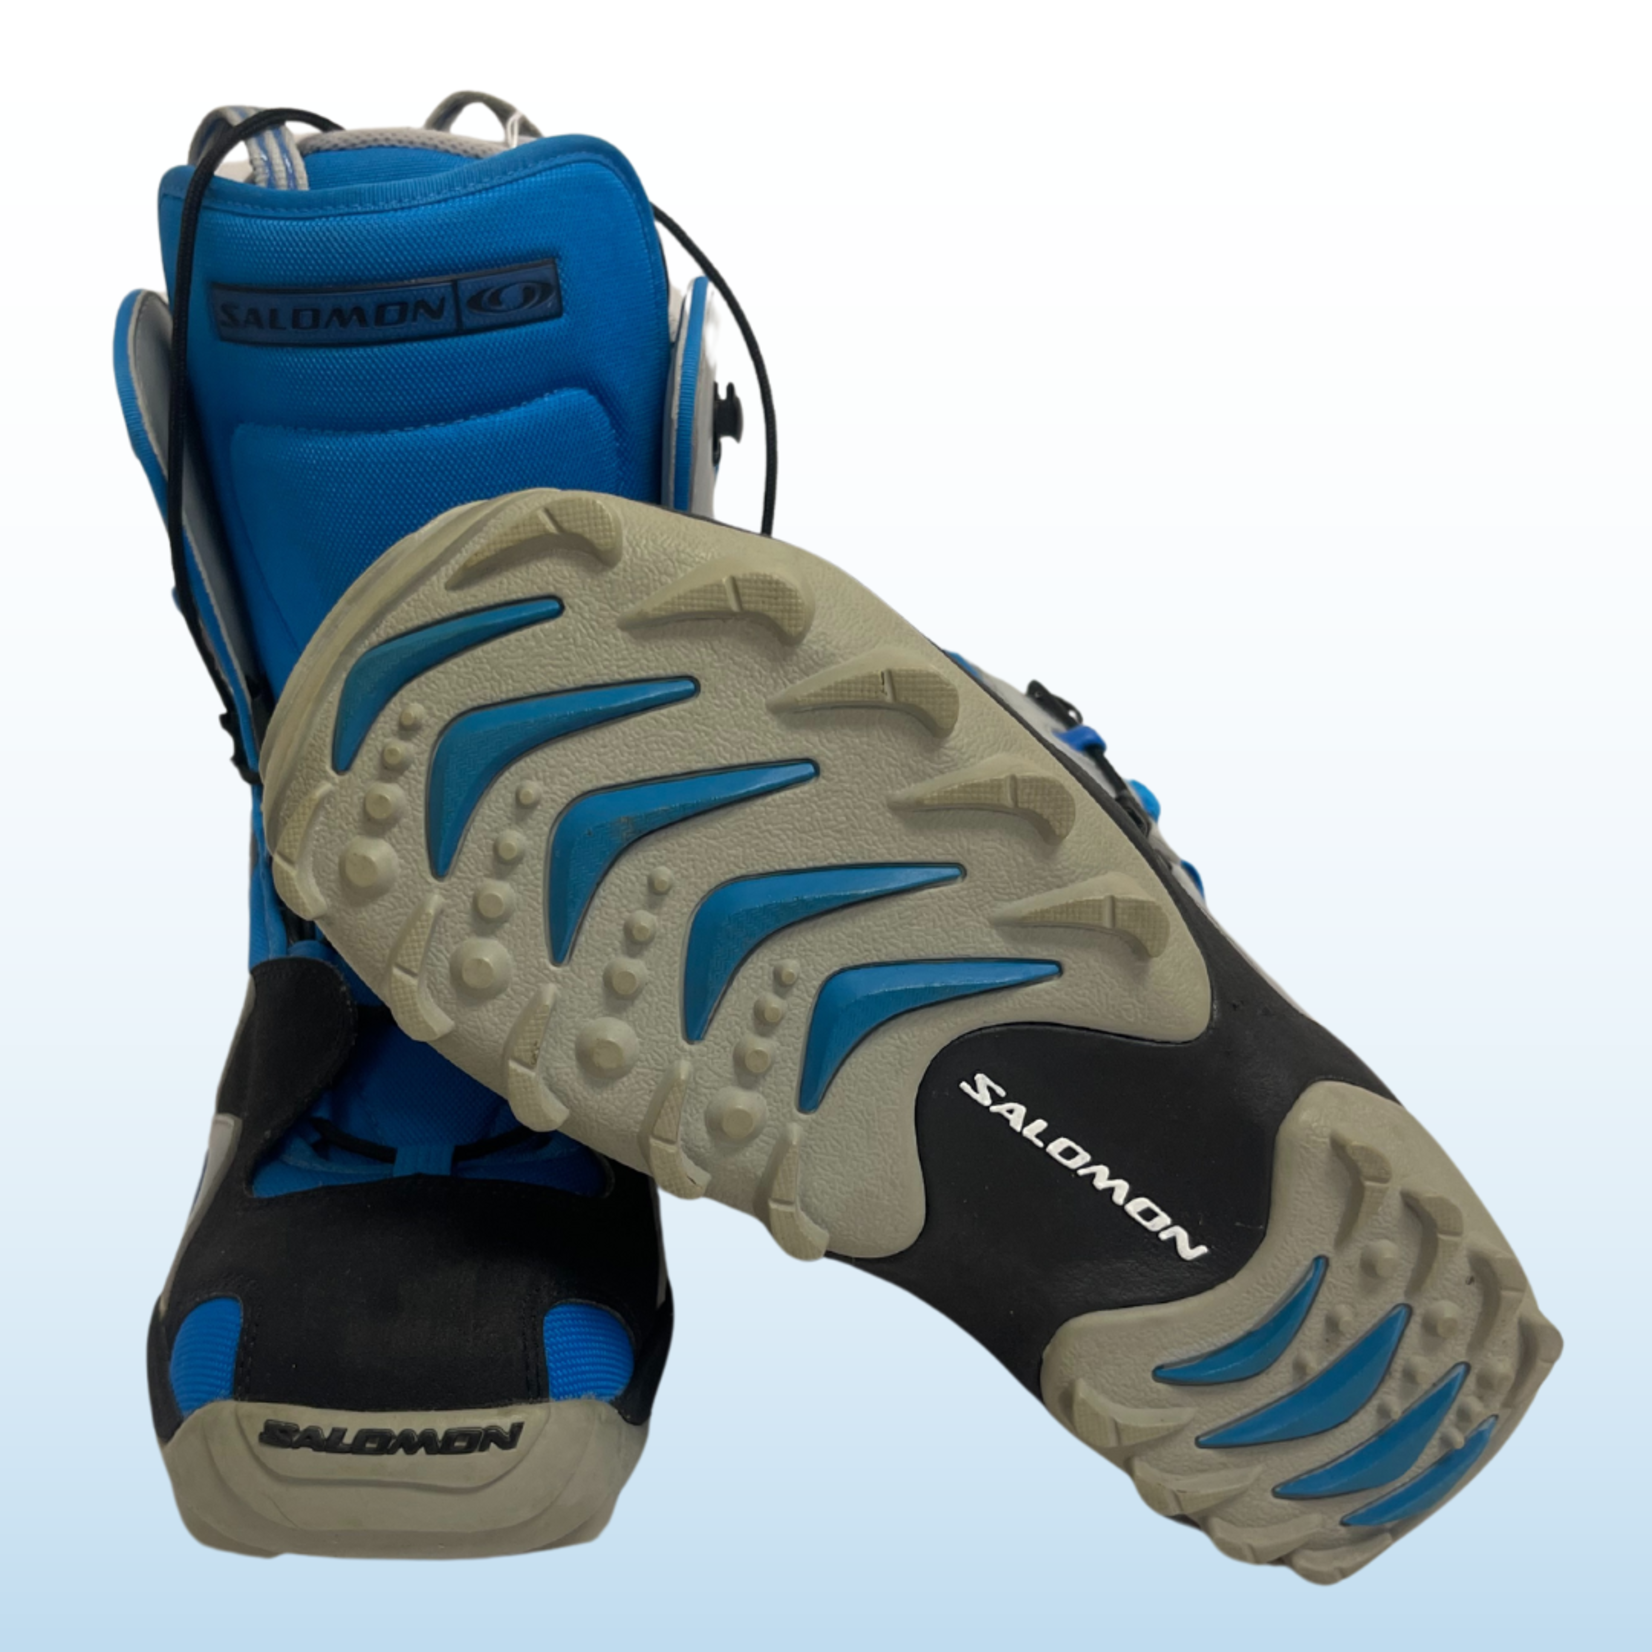 Salomon Salomon Dialogue Snowboard Boots, Size 12.0 MENS